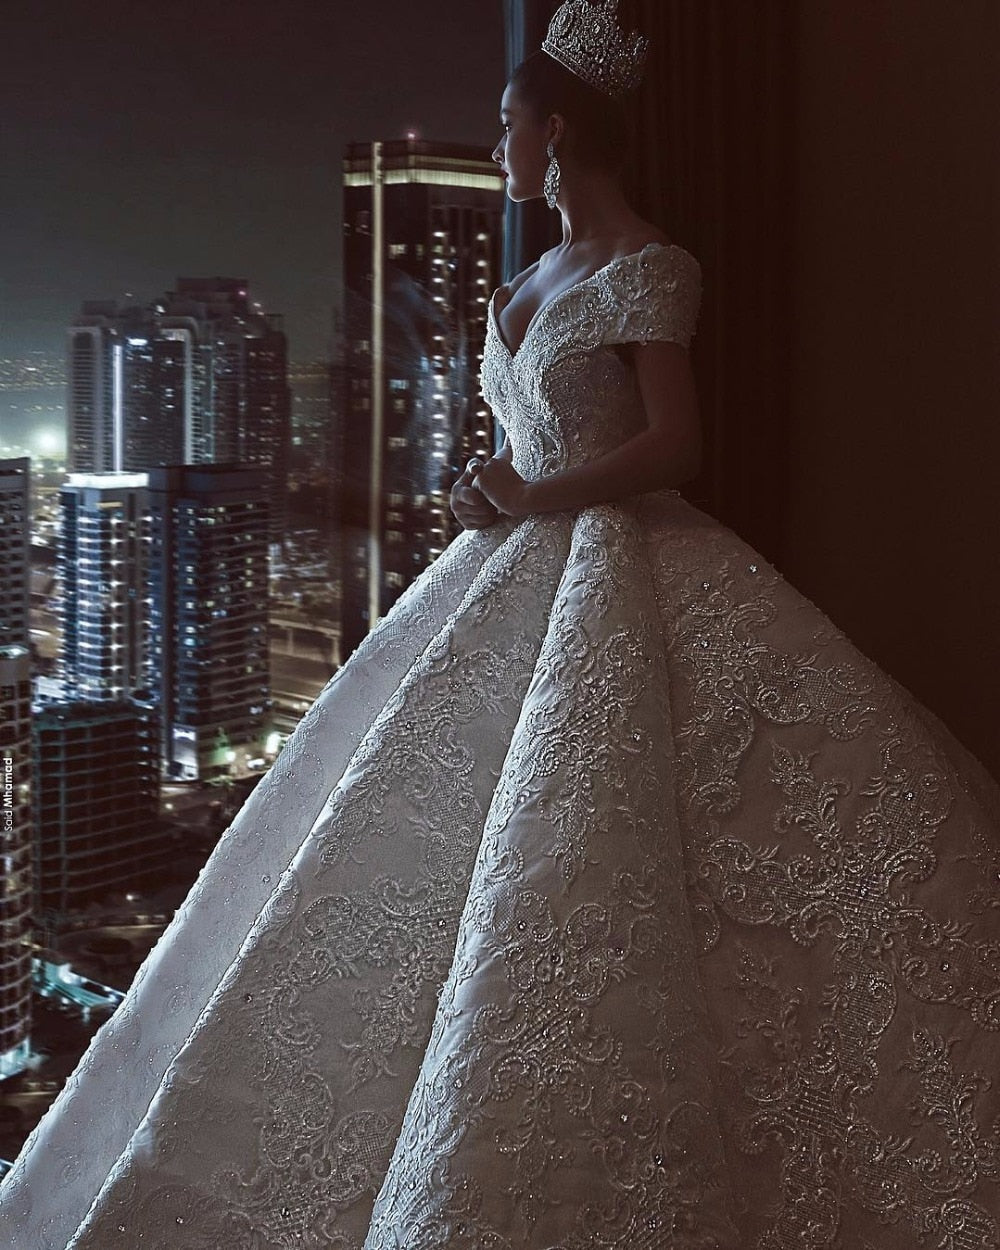 Sexy Luxury Lace Wedding Dress Ball Gown Deep V-Neck Off Shoulder Bride Dress Wedding Gown Open Back Long Vestido De Noiva - LiveTrendsX